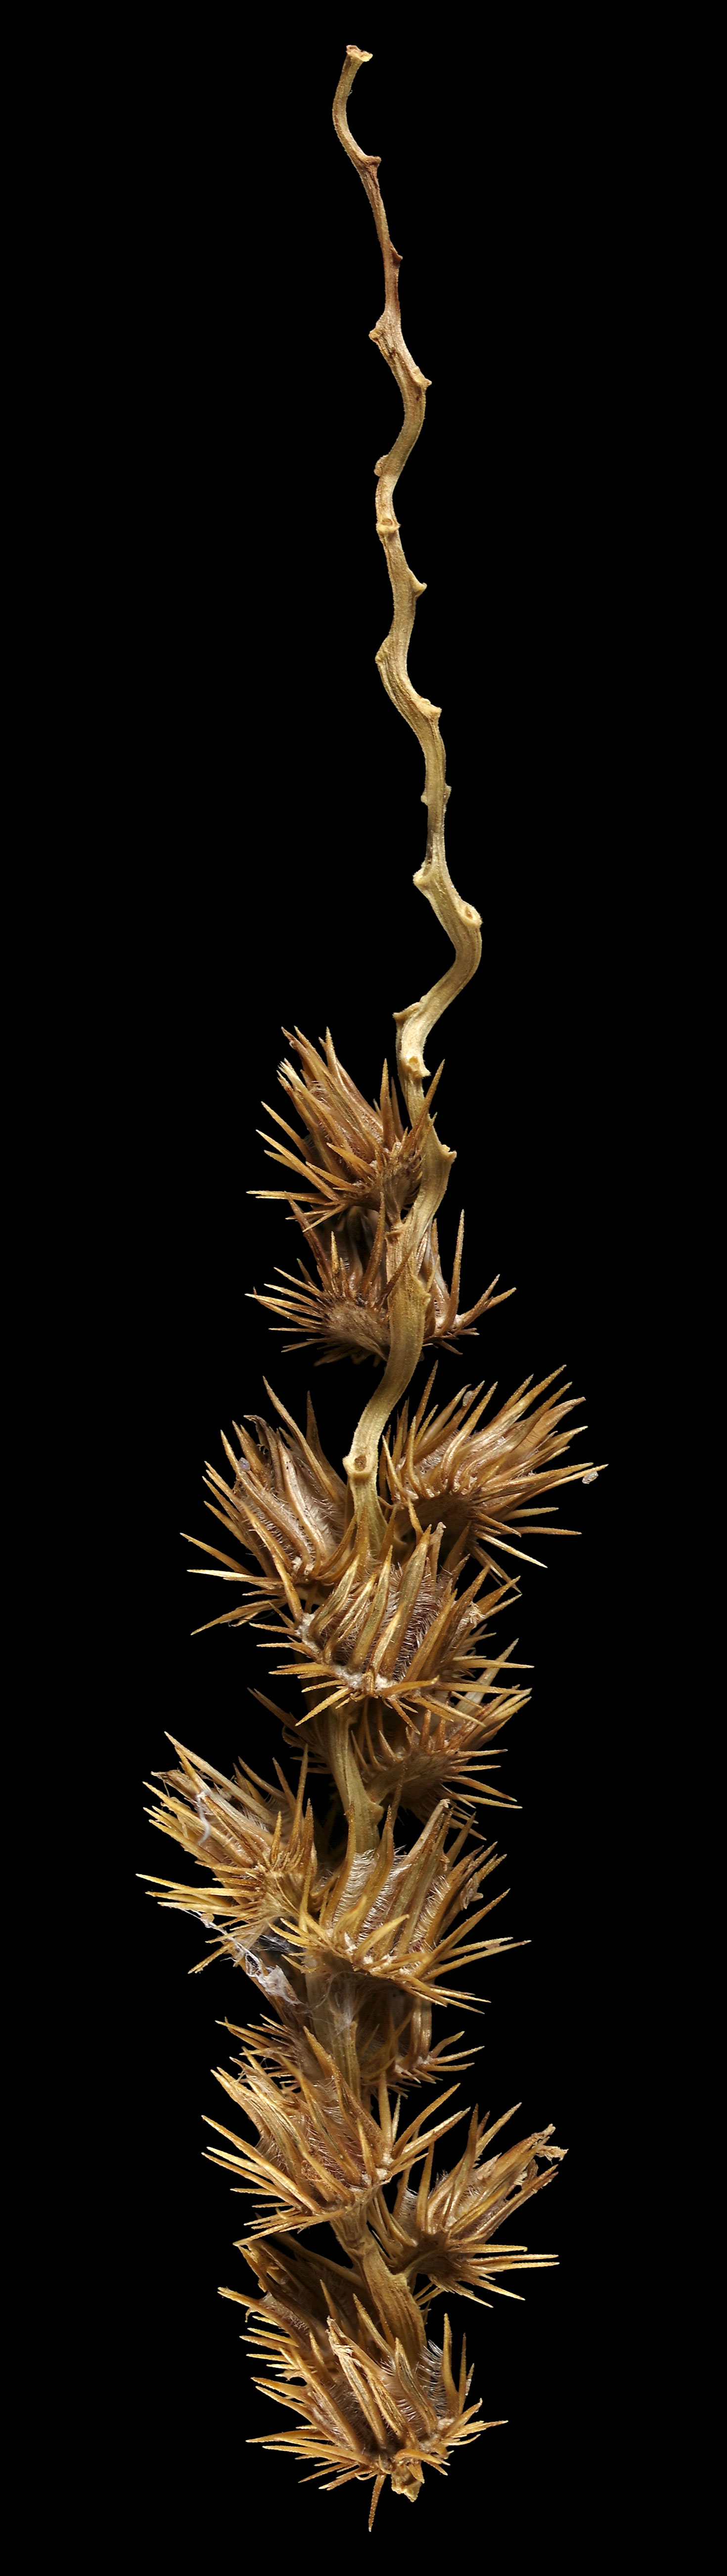 Indian sandbur: Cenchrus biflorus